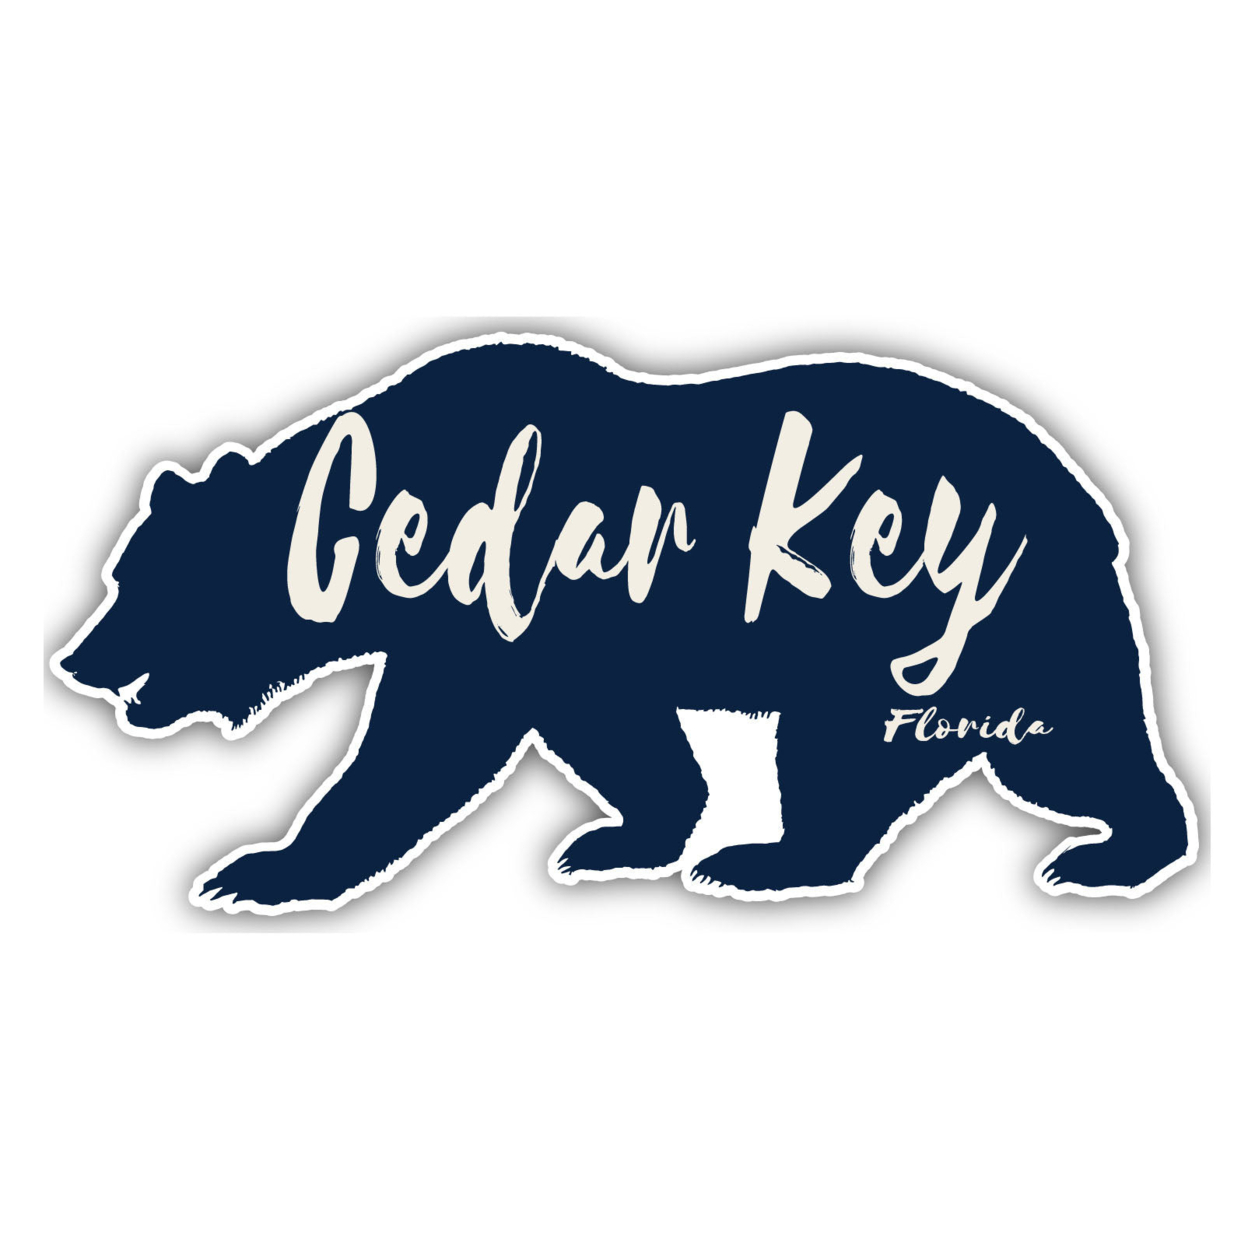 Cedar Key Florida Souvenir Decorative Stickers (Choose Theme And Size) - Single Unit, 12-Inch, Tent